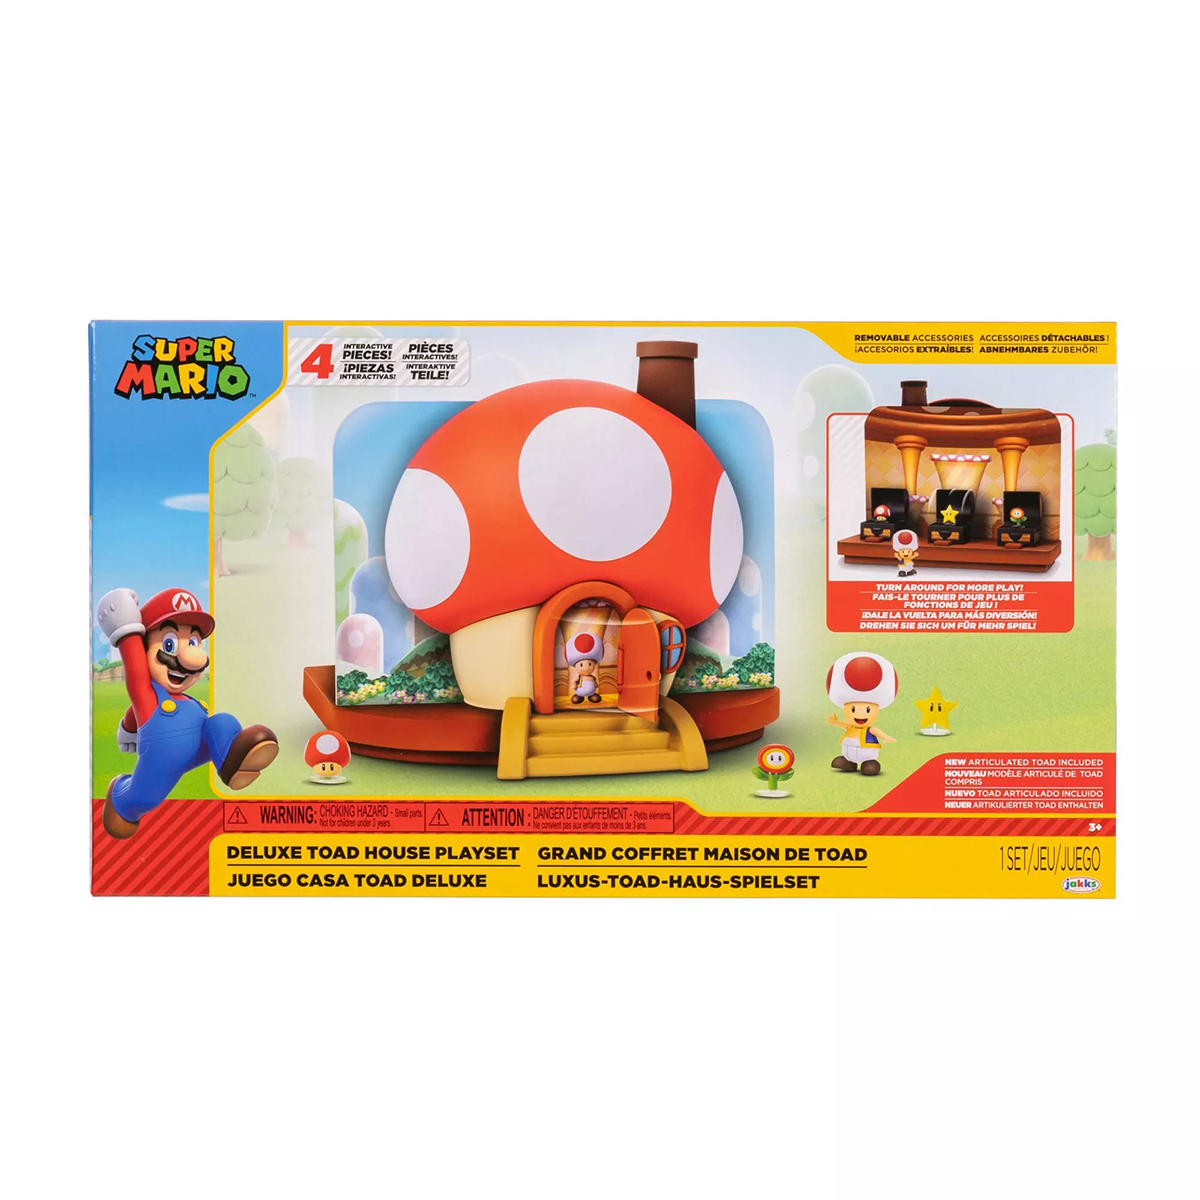 Jakks Pacific Super Mario Deluxe Toad House Playset